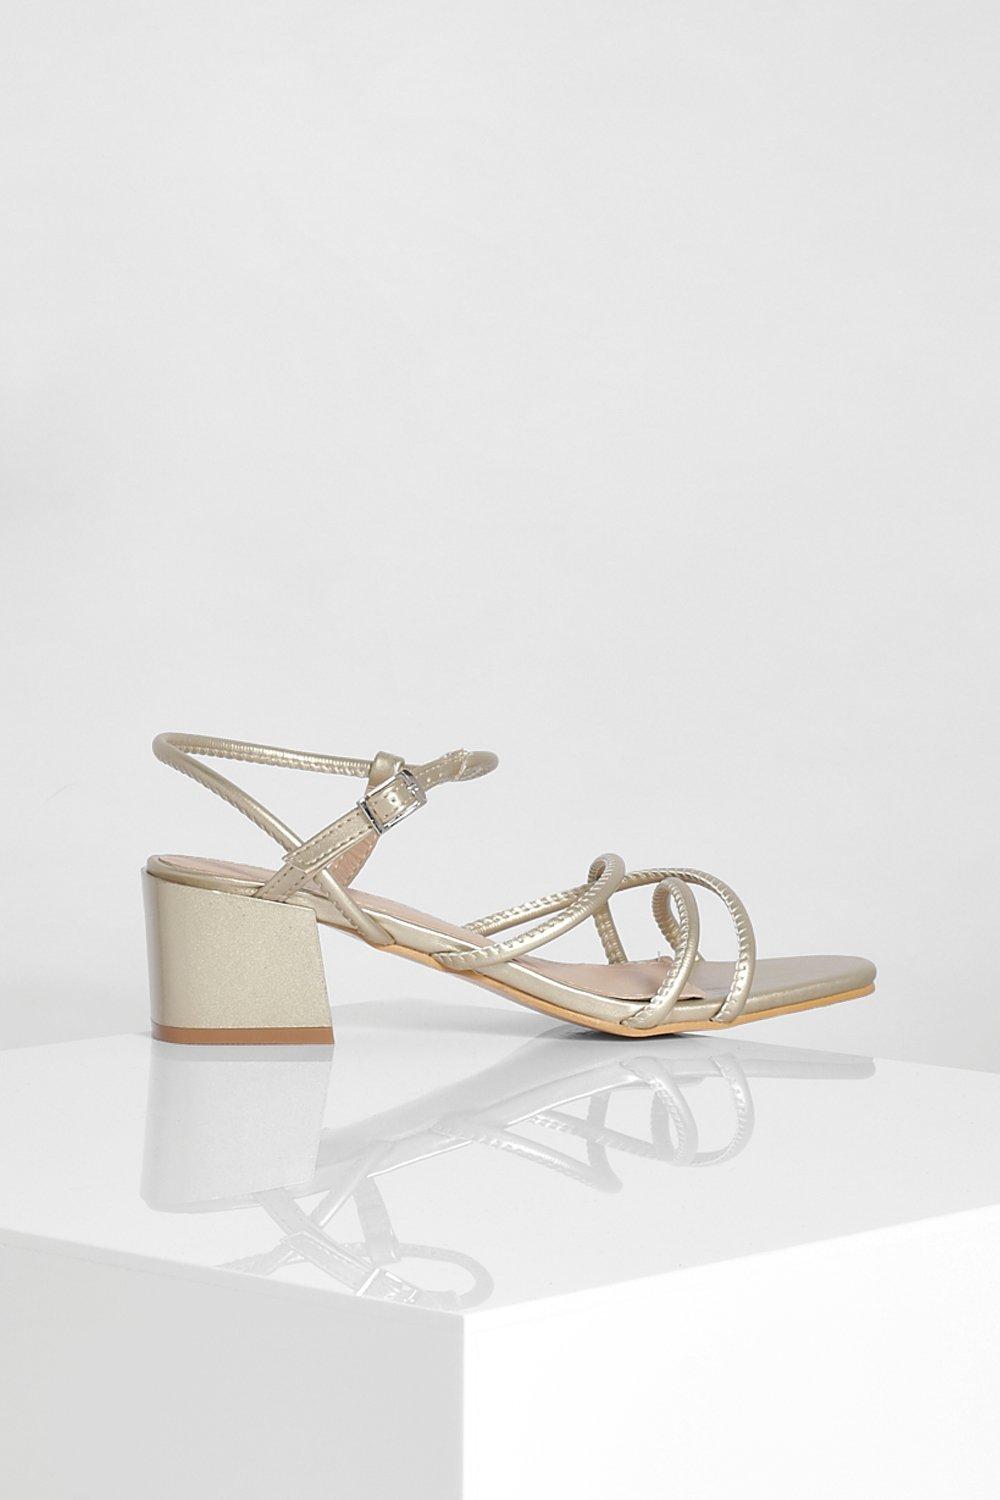 gold strappy block heels